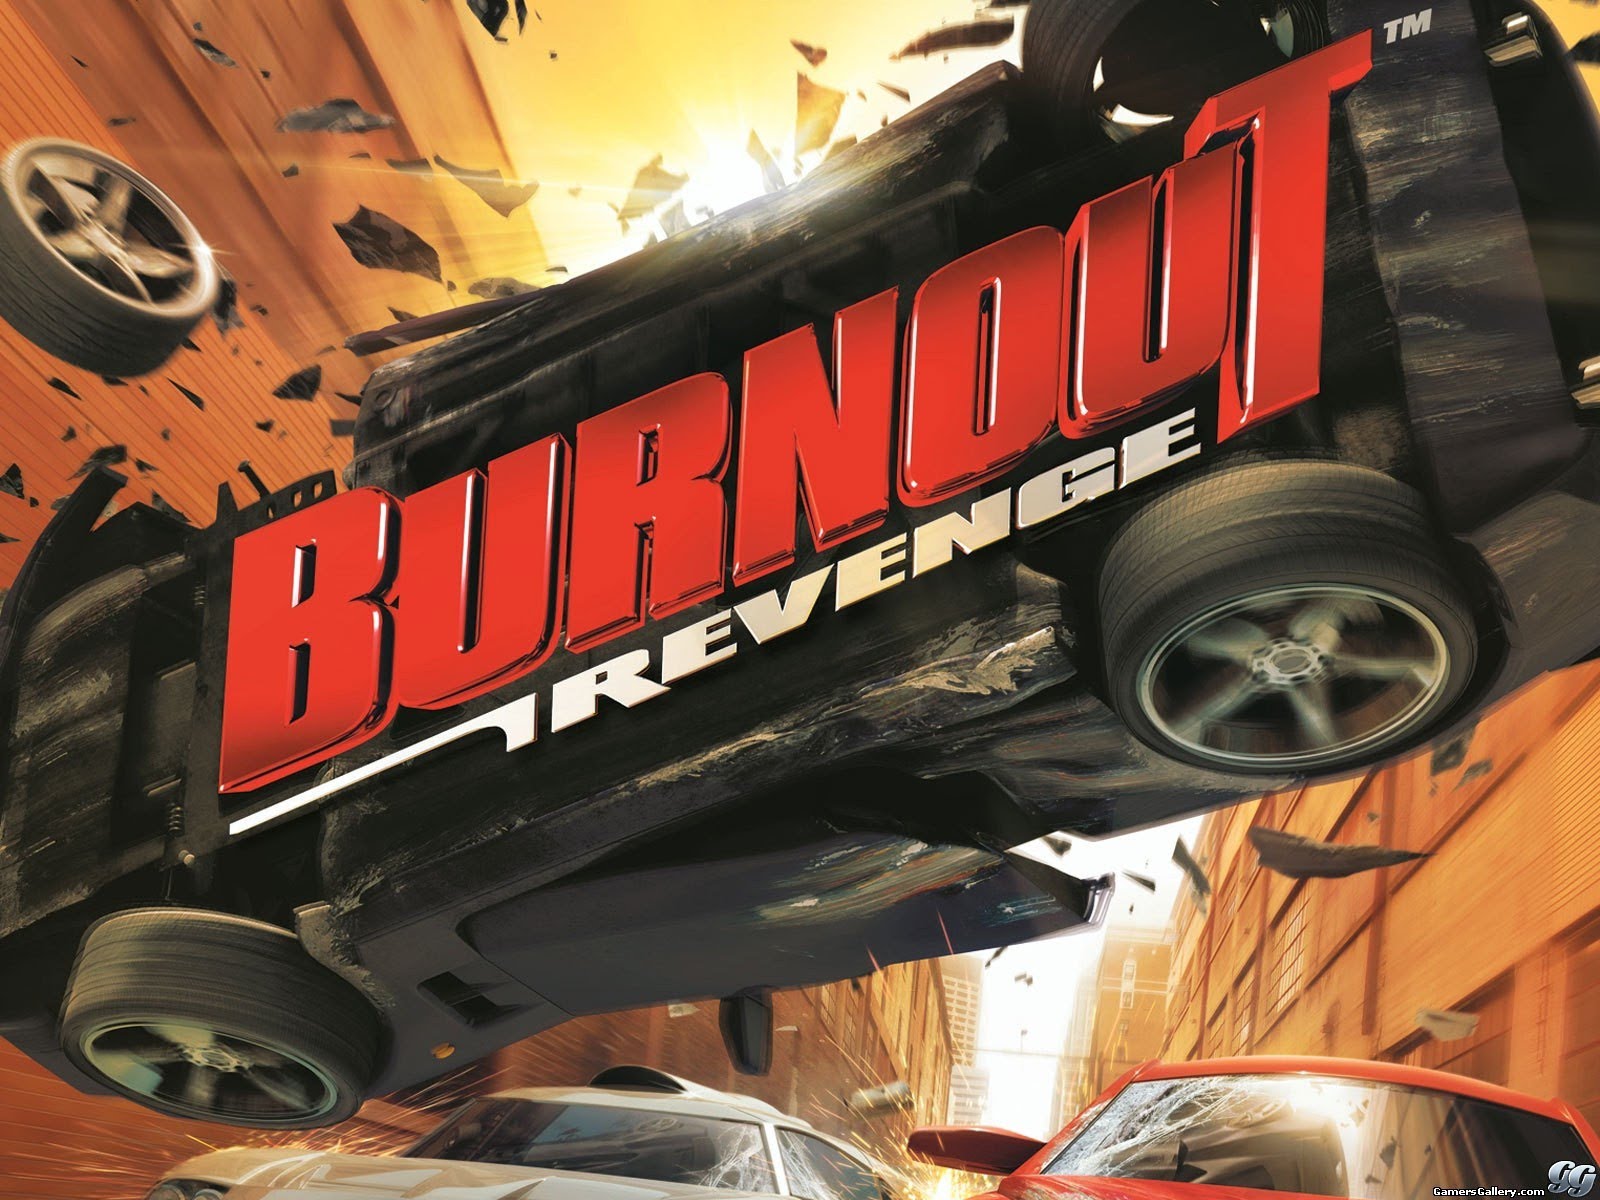 Burnout Revenge HD wallpapers, Desktop wallpaper - most viewed